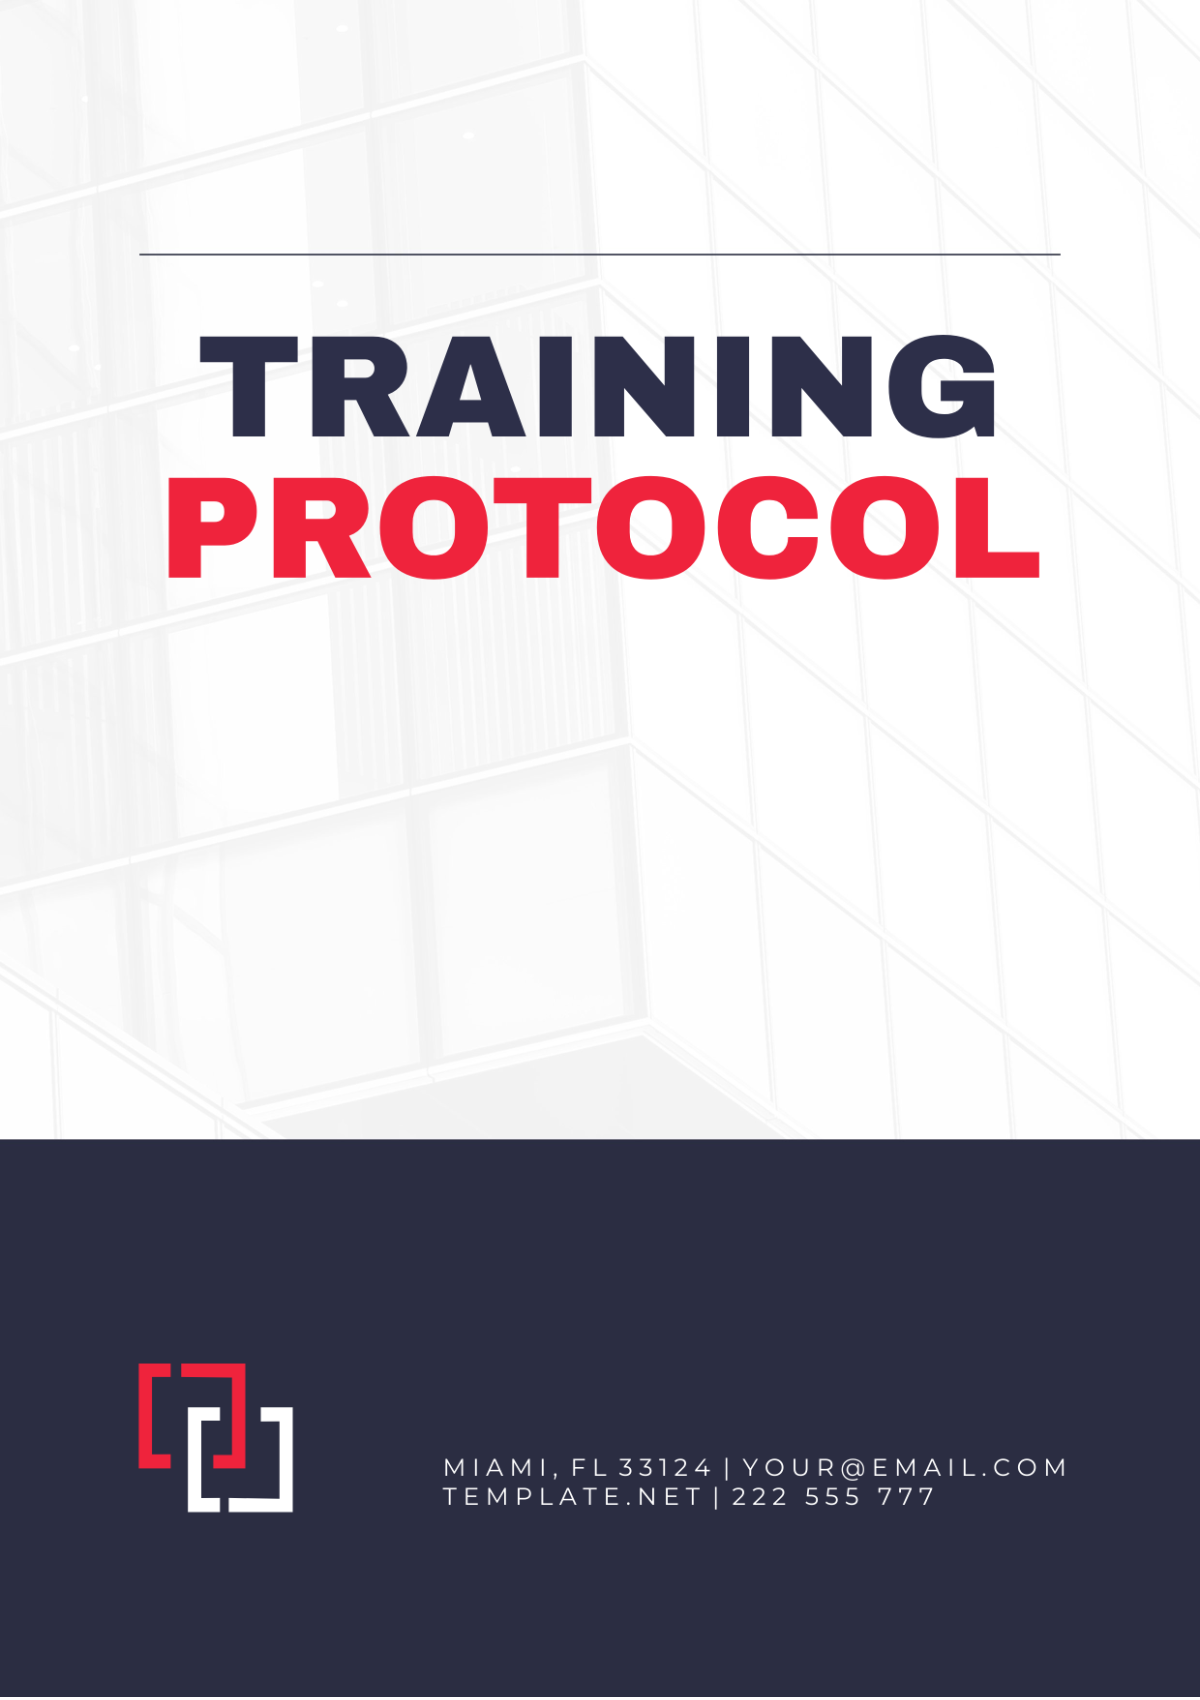 Free Training Protocol Template